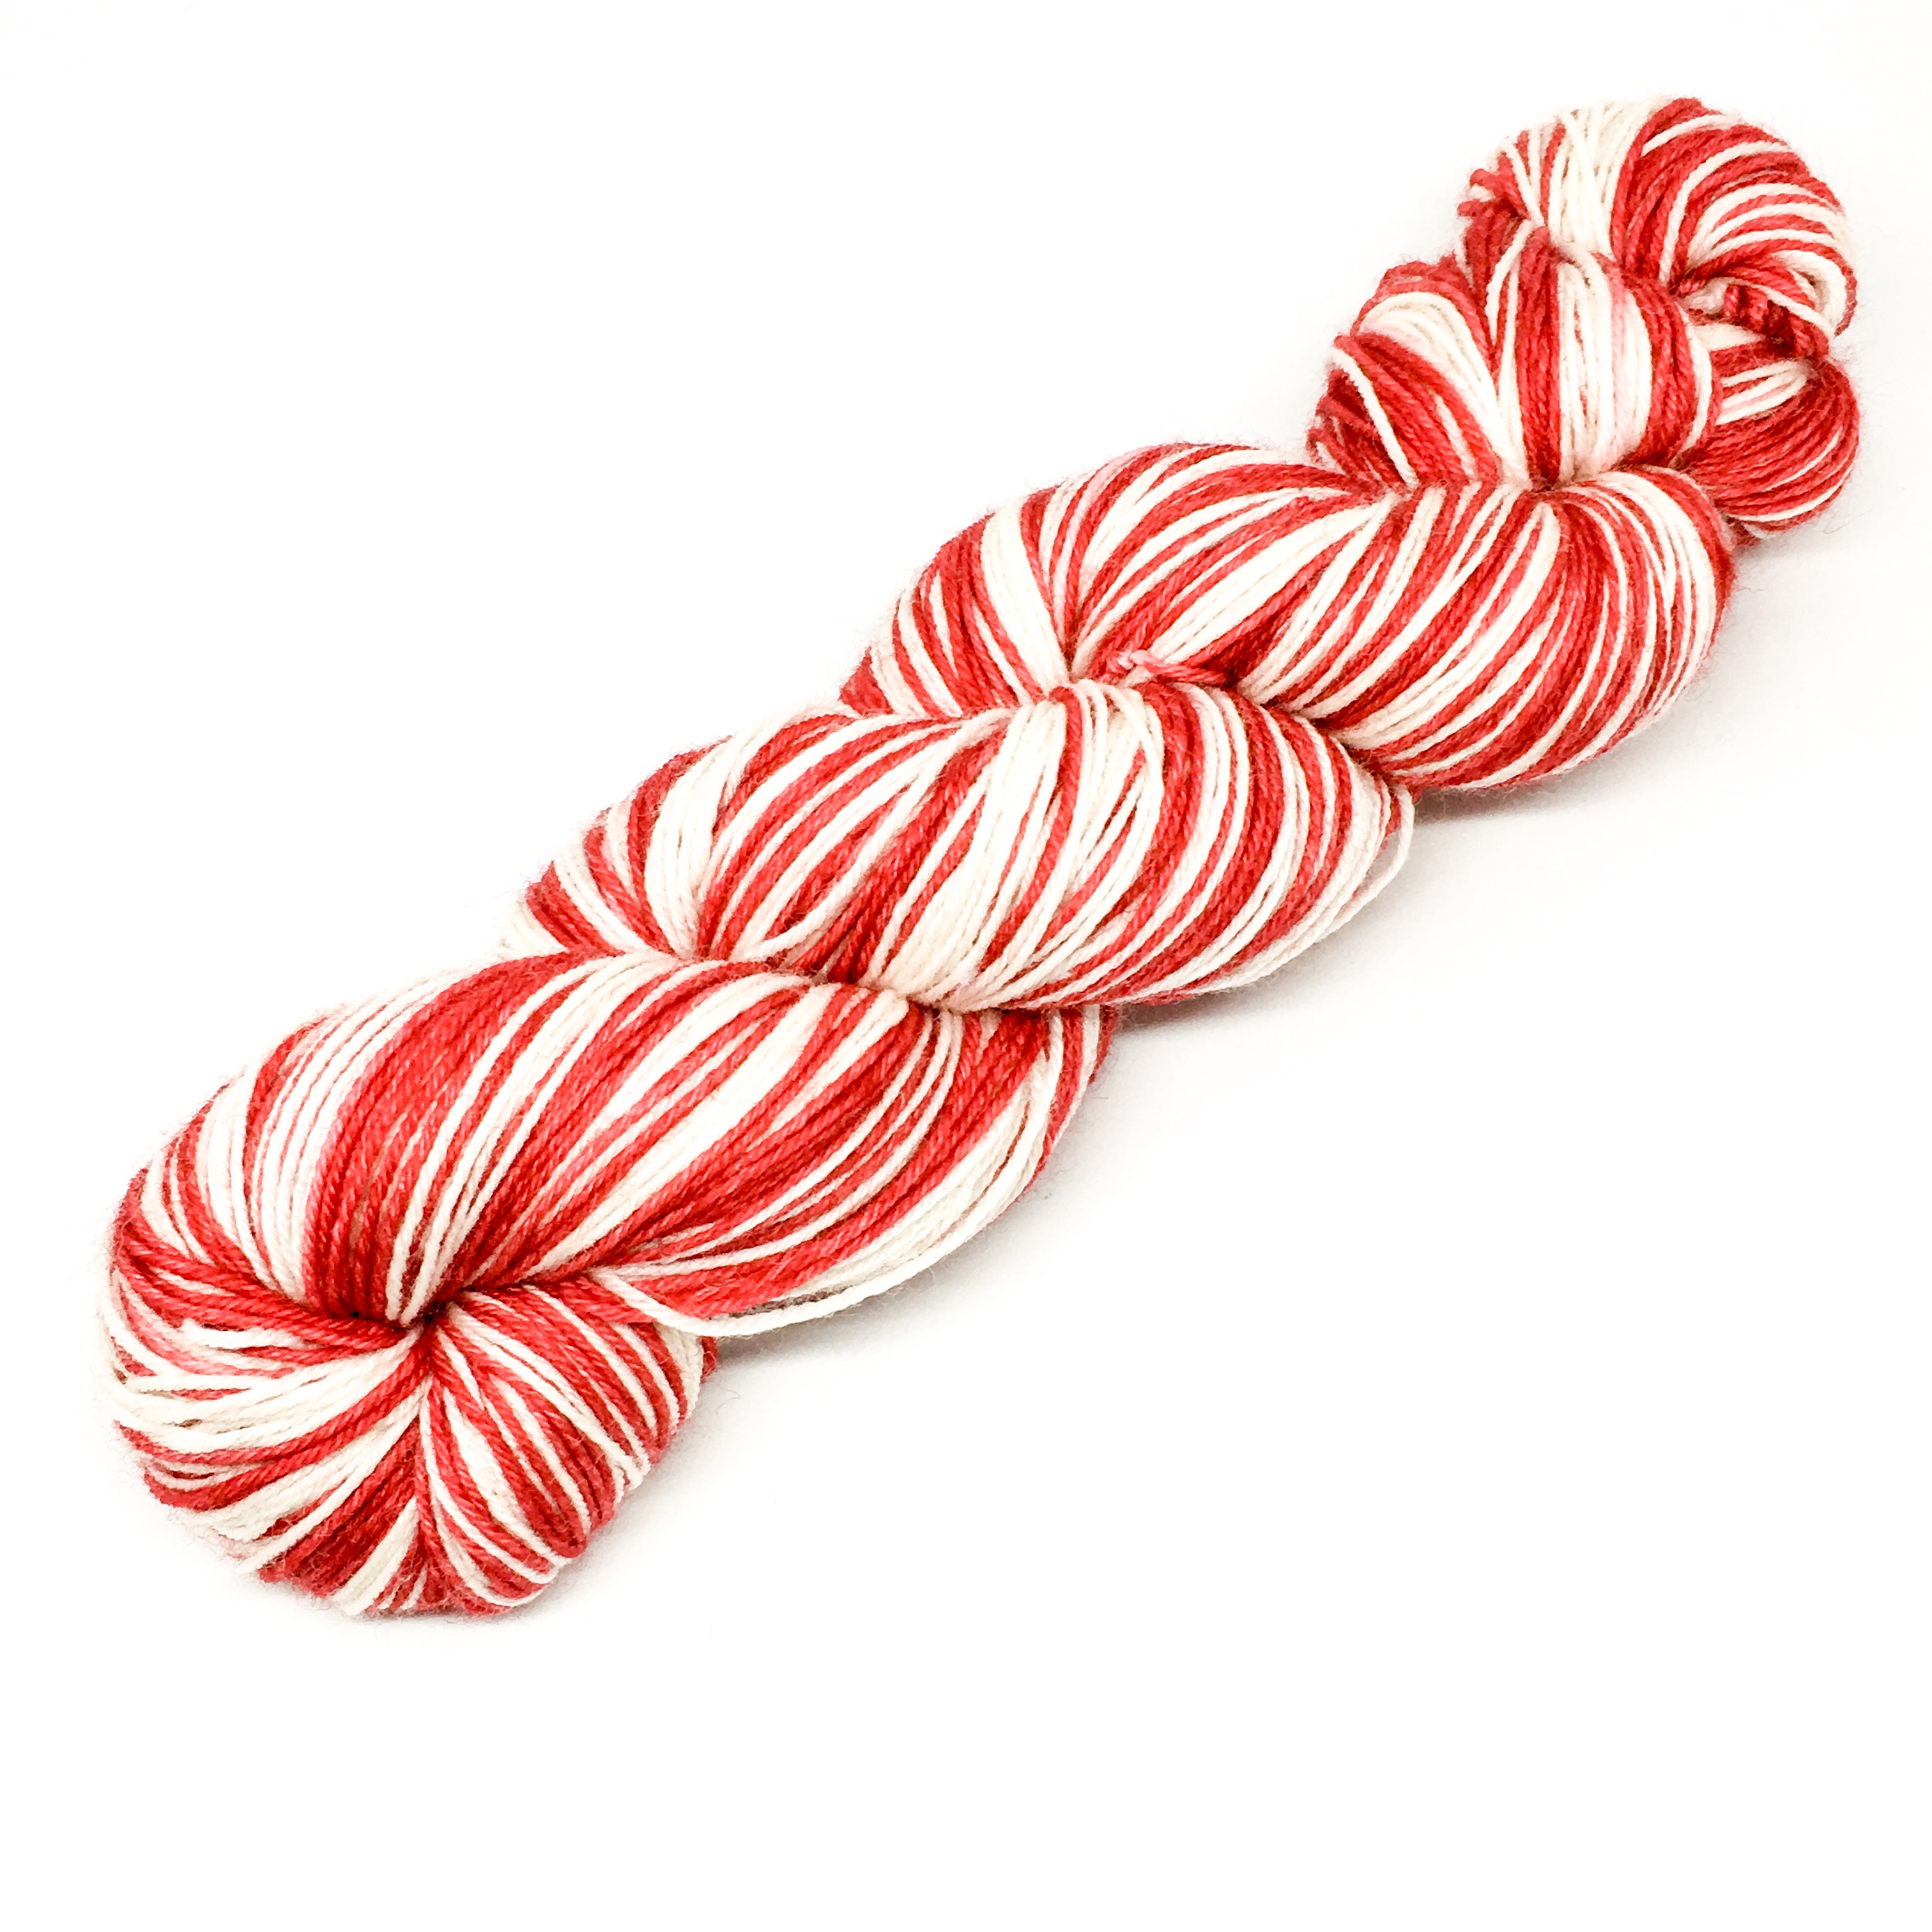 Candy cane self striping sock yarn, red and white stripy yarn, Christmas yarn